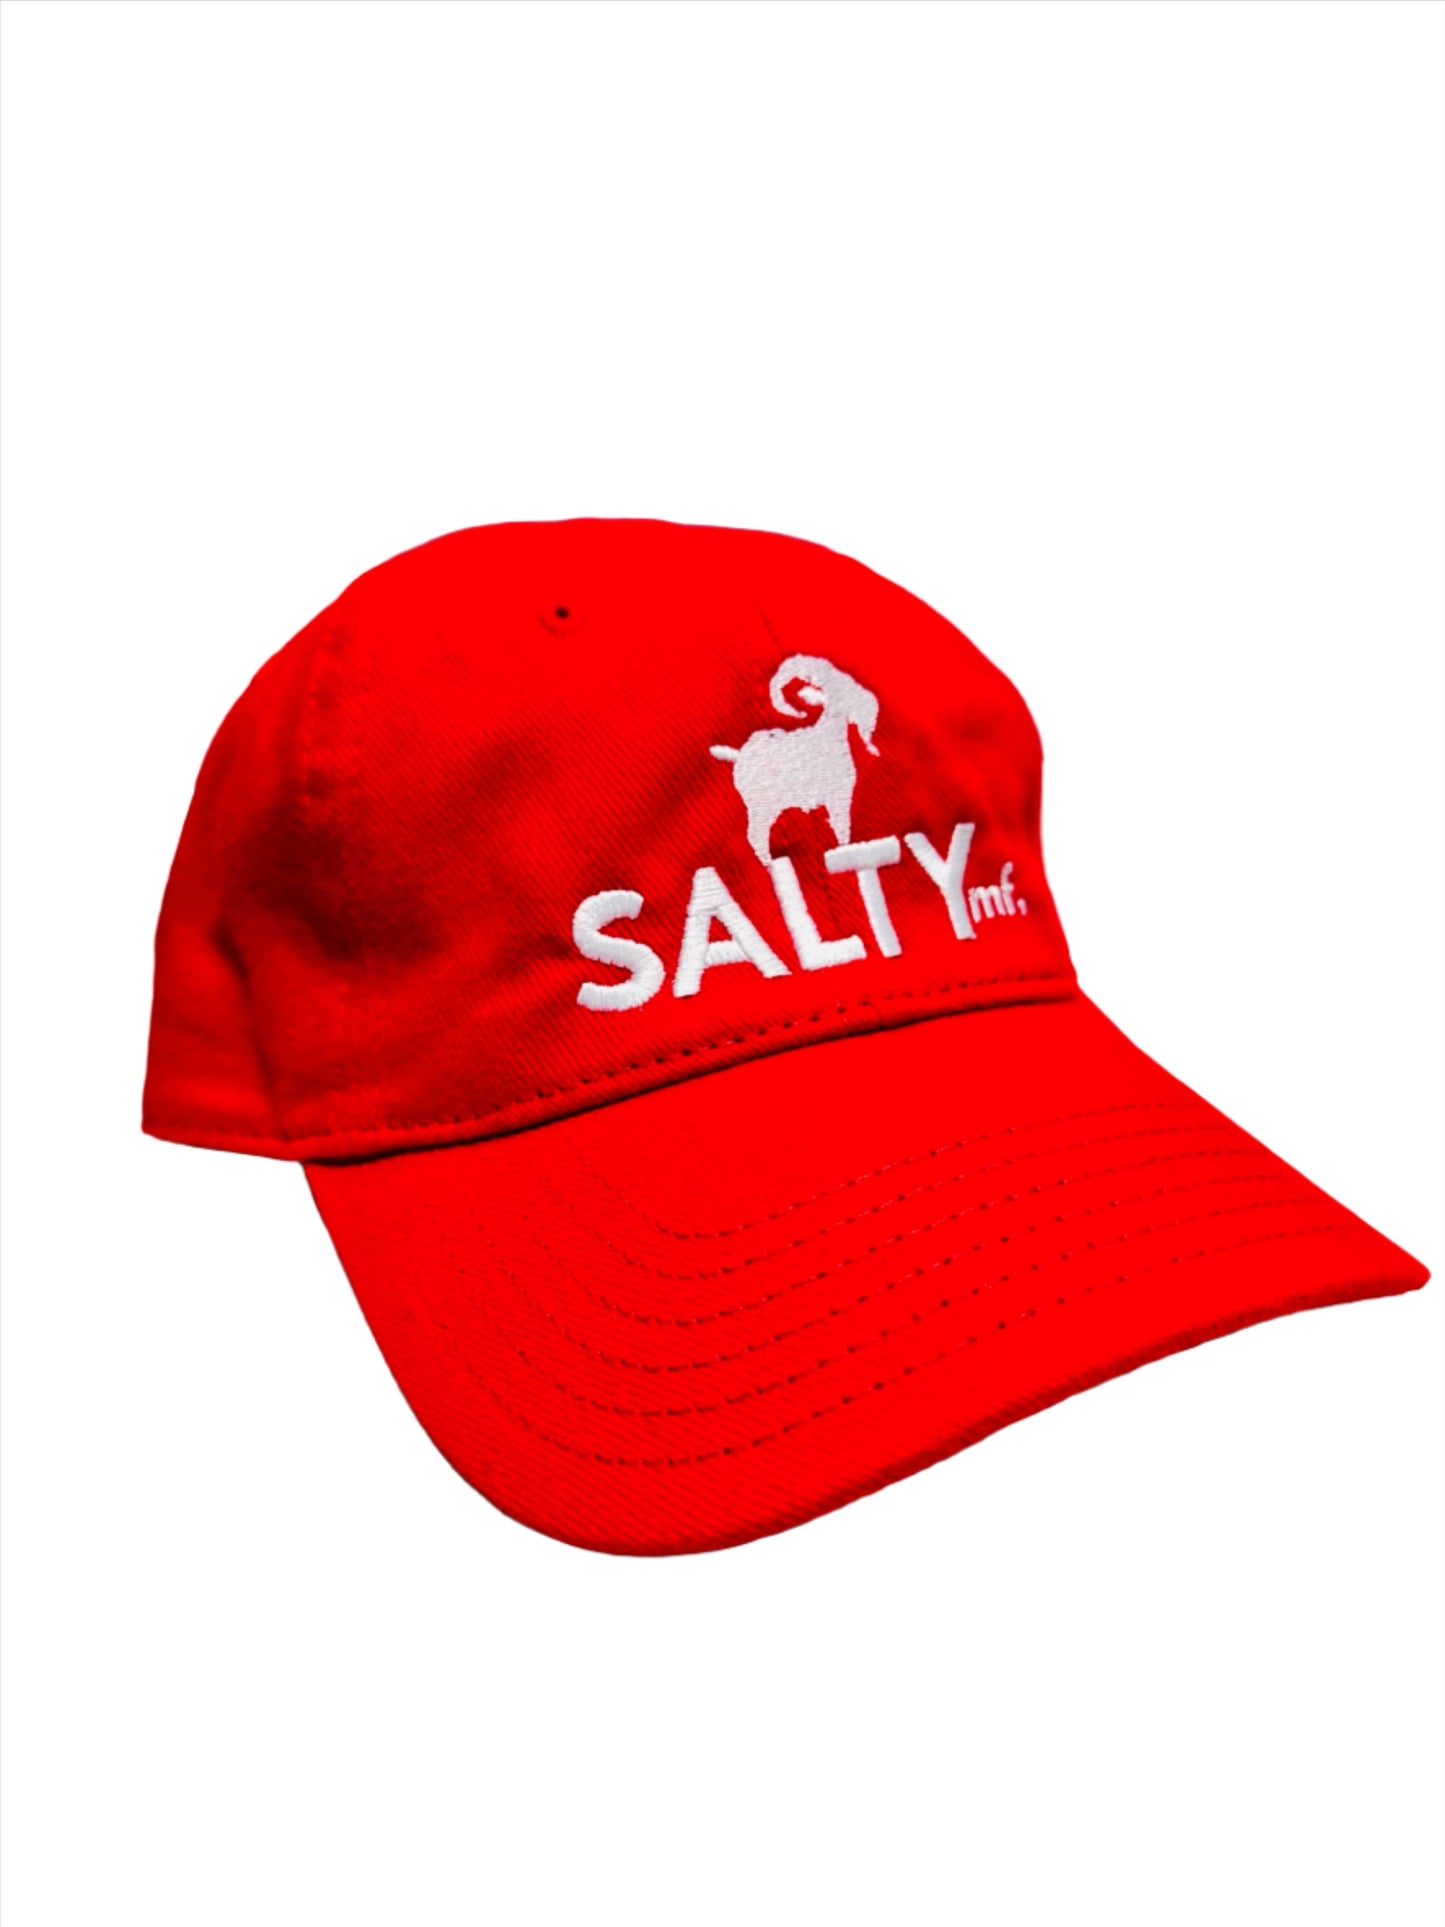 SALTYMF Full logo Twill Hat